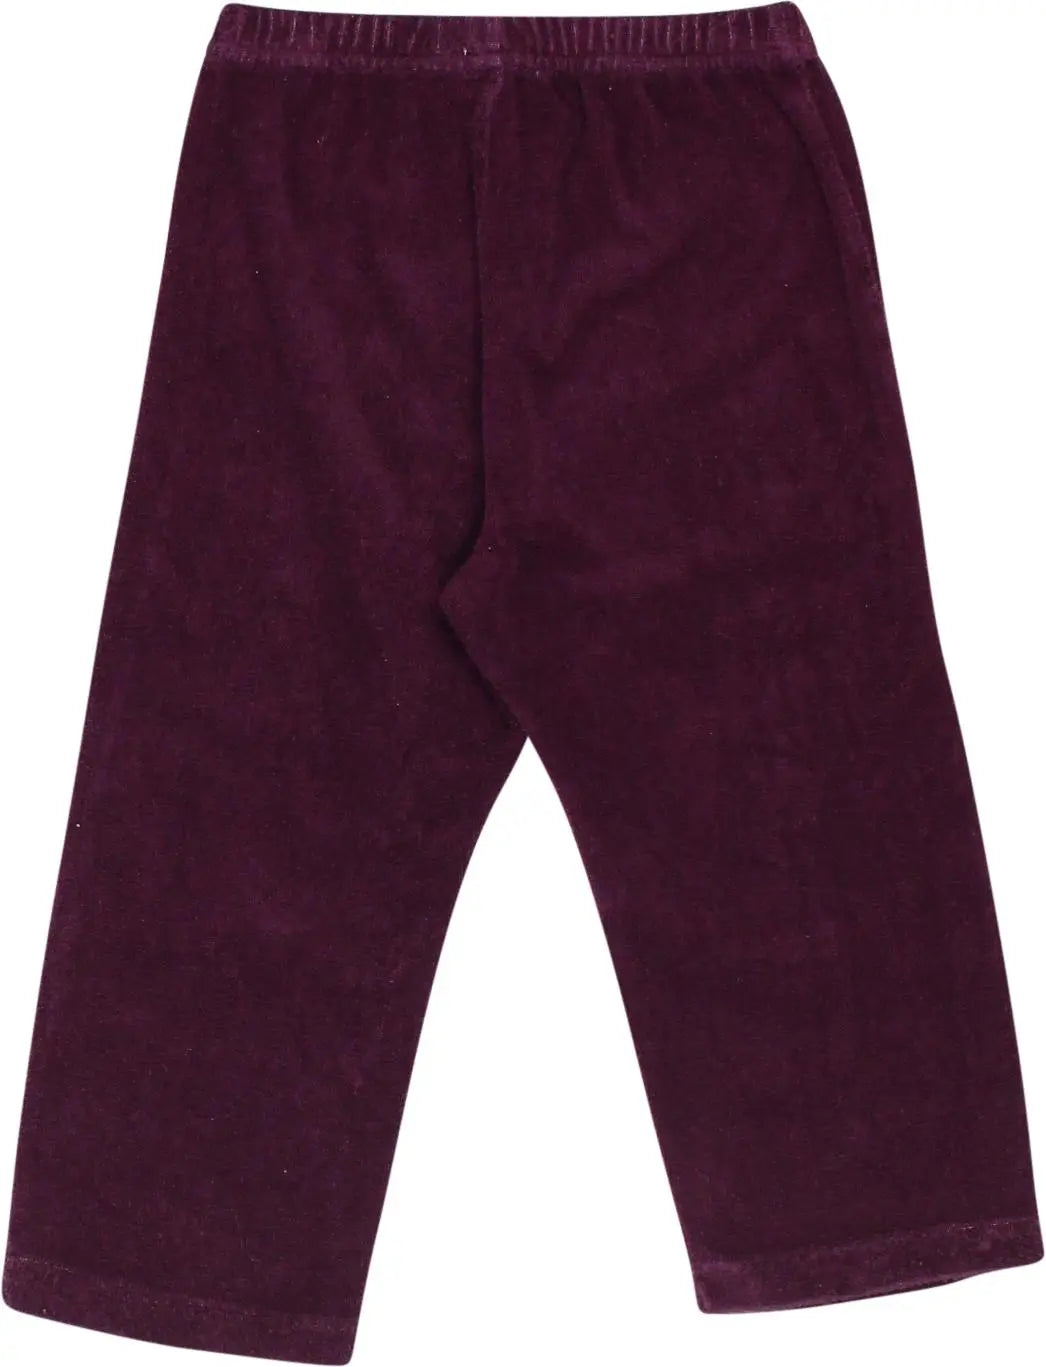 HEMA - Purple Joggers Pyjama Pants- ThriftTale.com - Vintage and second handclothing